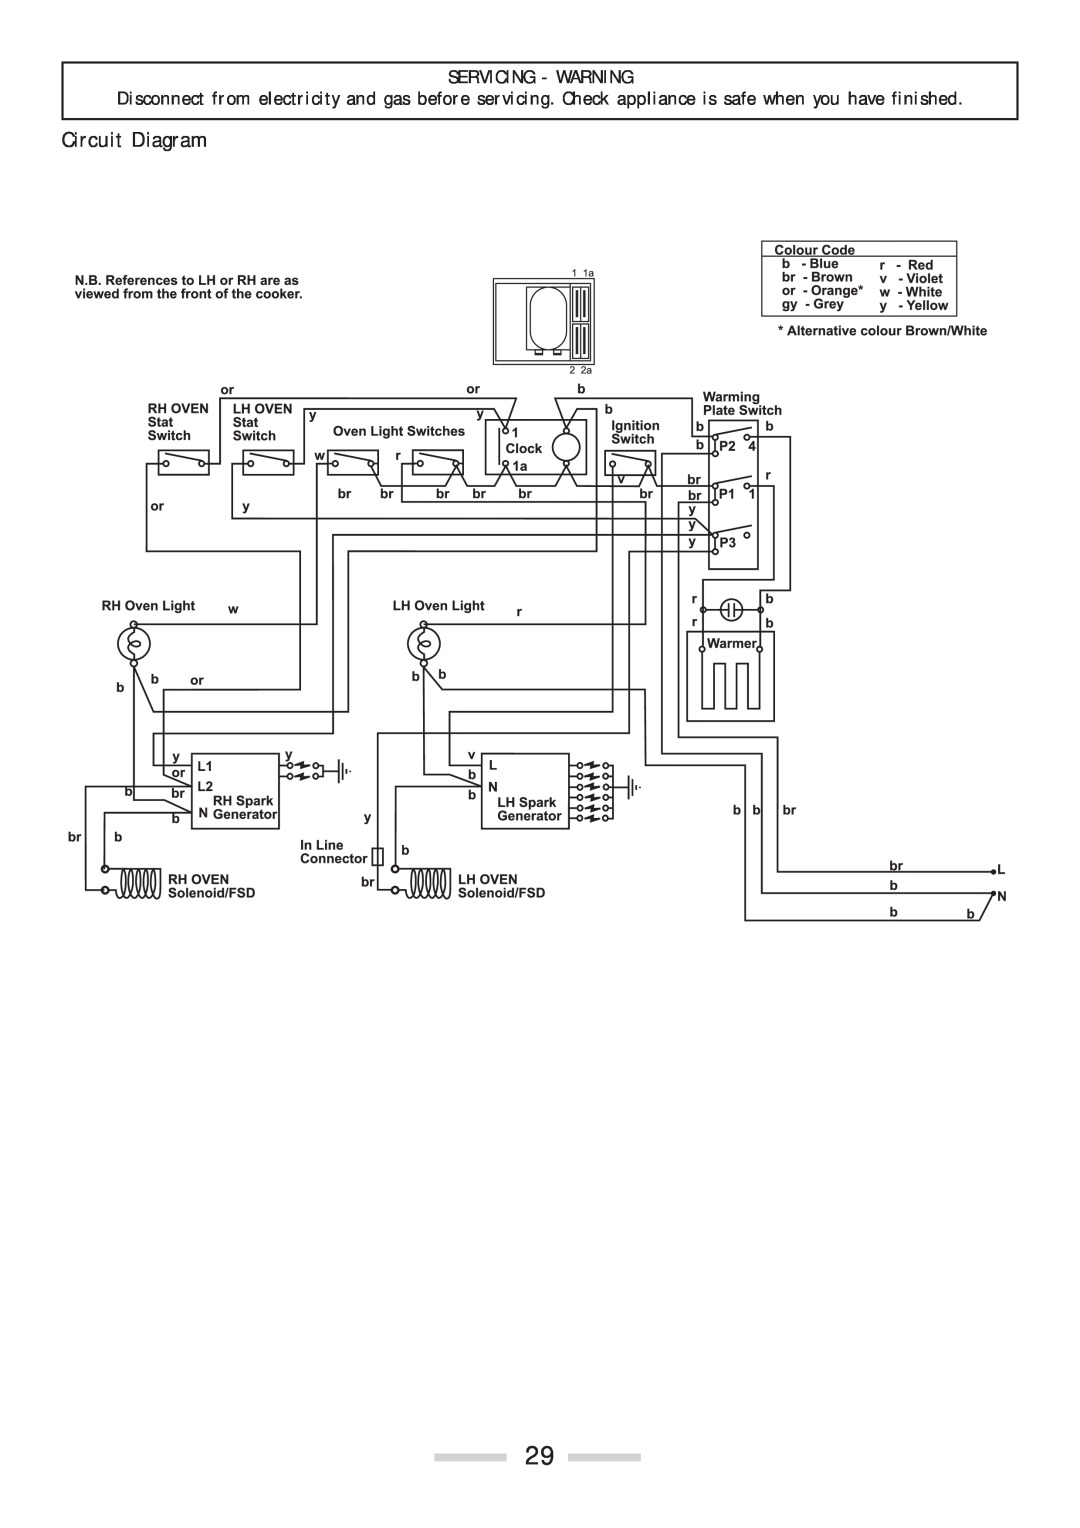 Rangemaster 110 installation instructions Circuit Diagram, Servicing - Warning 